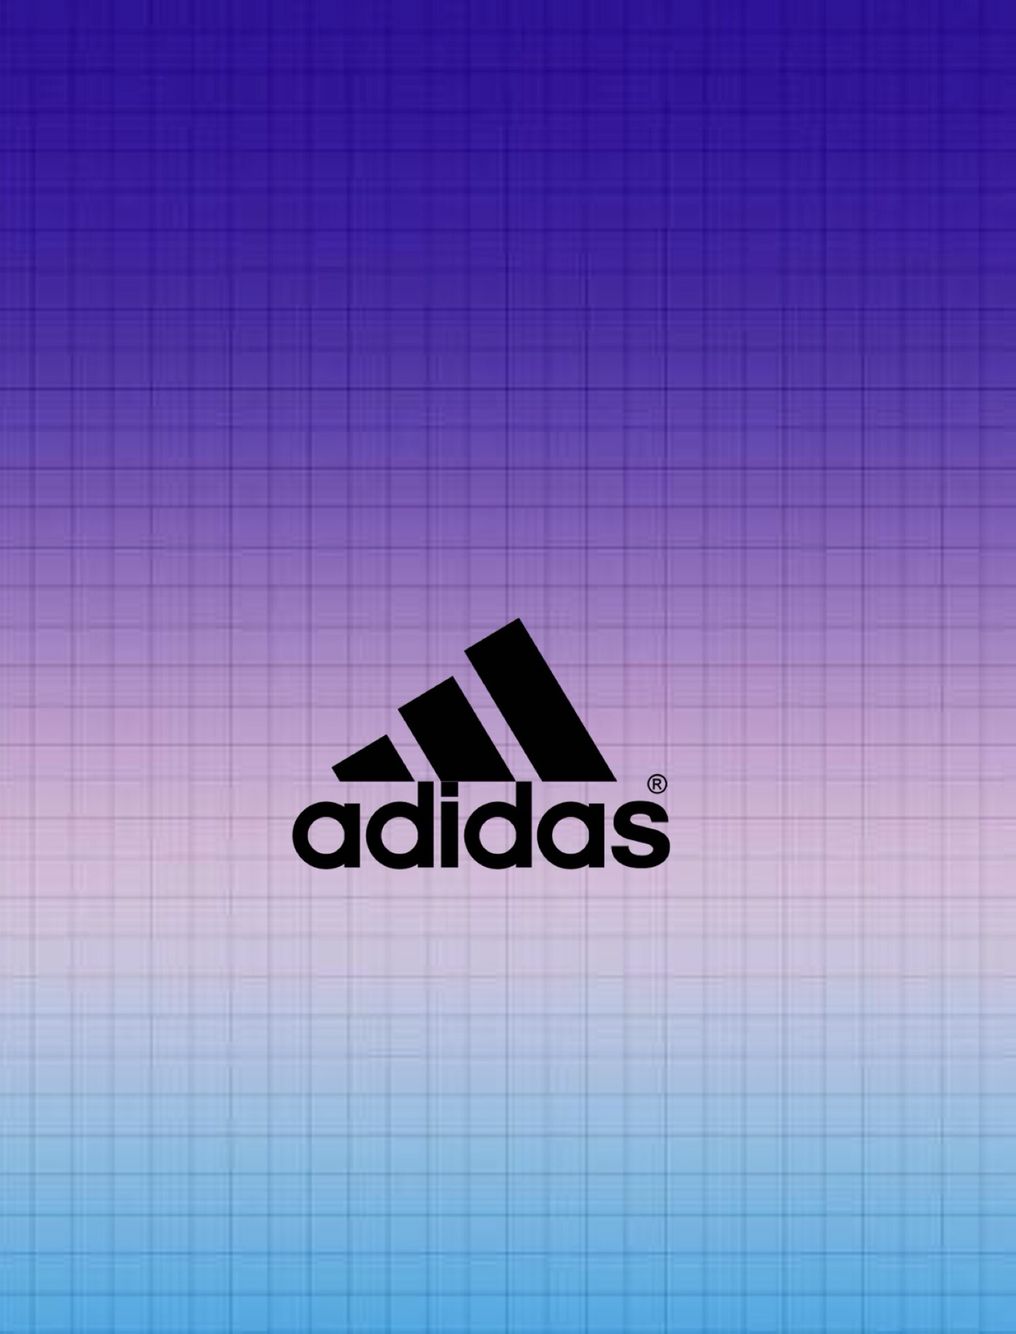 Adidas Aesthetic Wallpaper Nike Shoe Boots